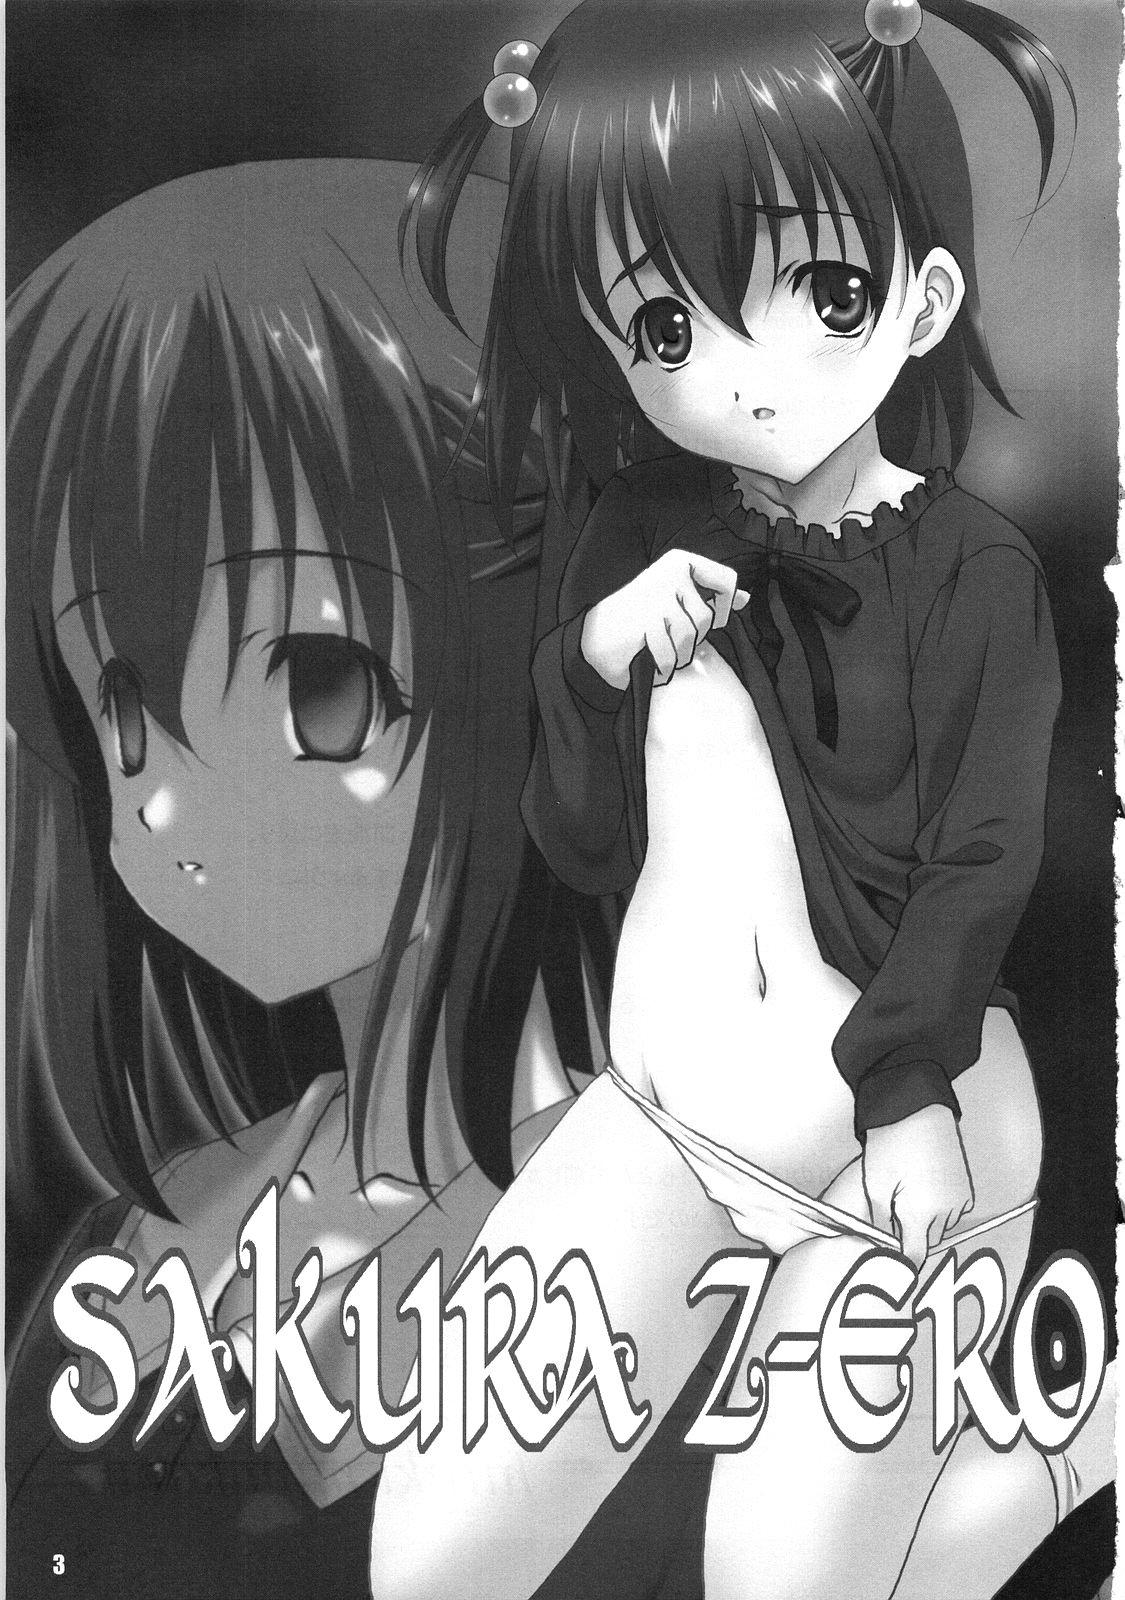 Chaturbate SAKURA Z-ERO EXtra stage vol. 22 - Fate stay night Fate zero Stretching - Page 2